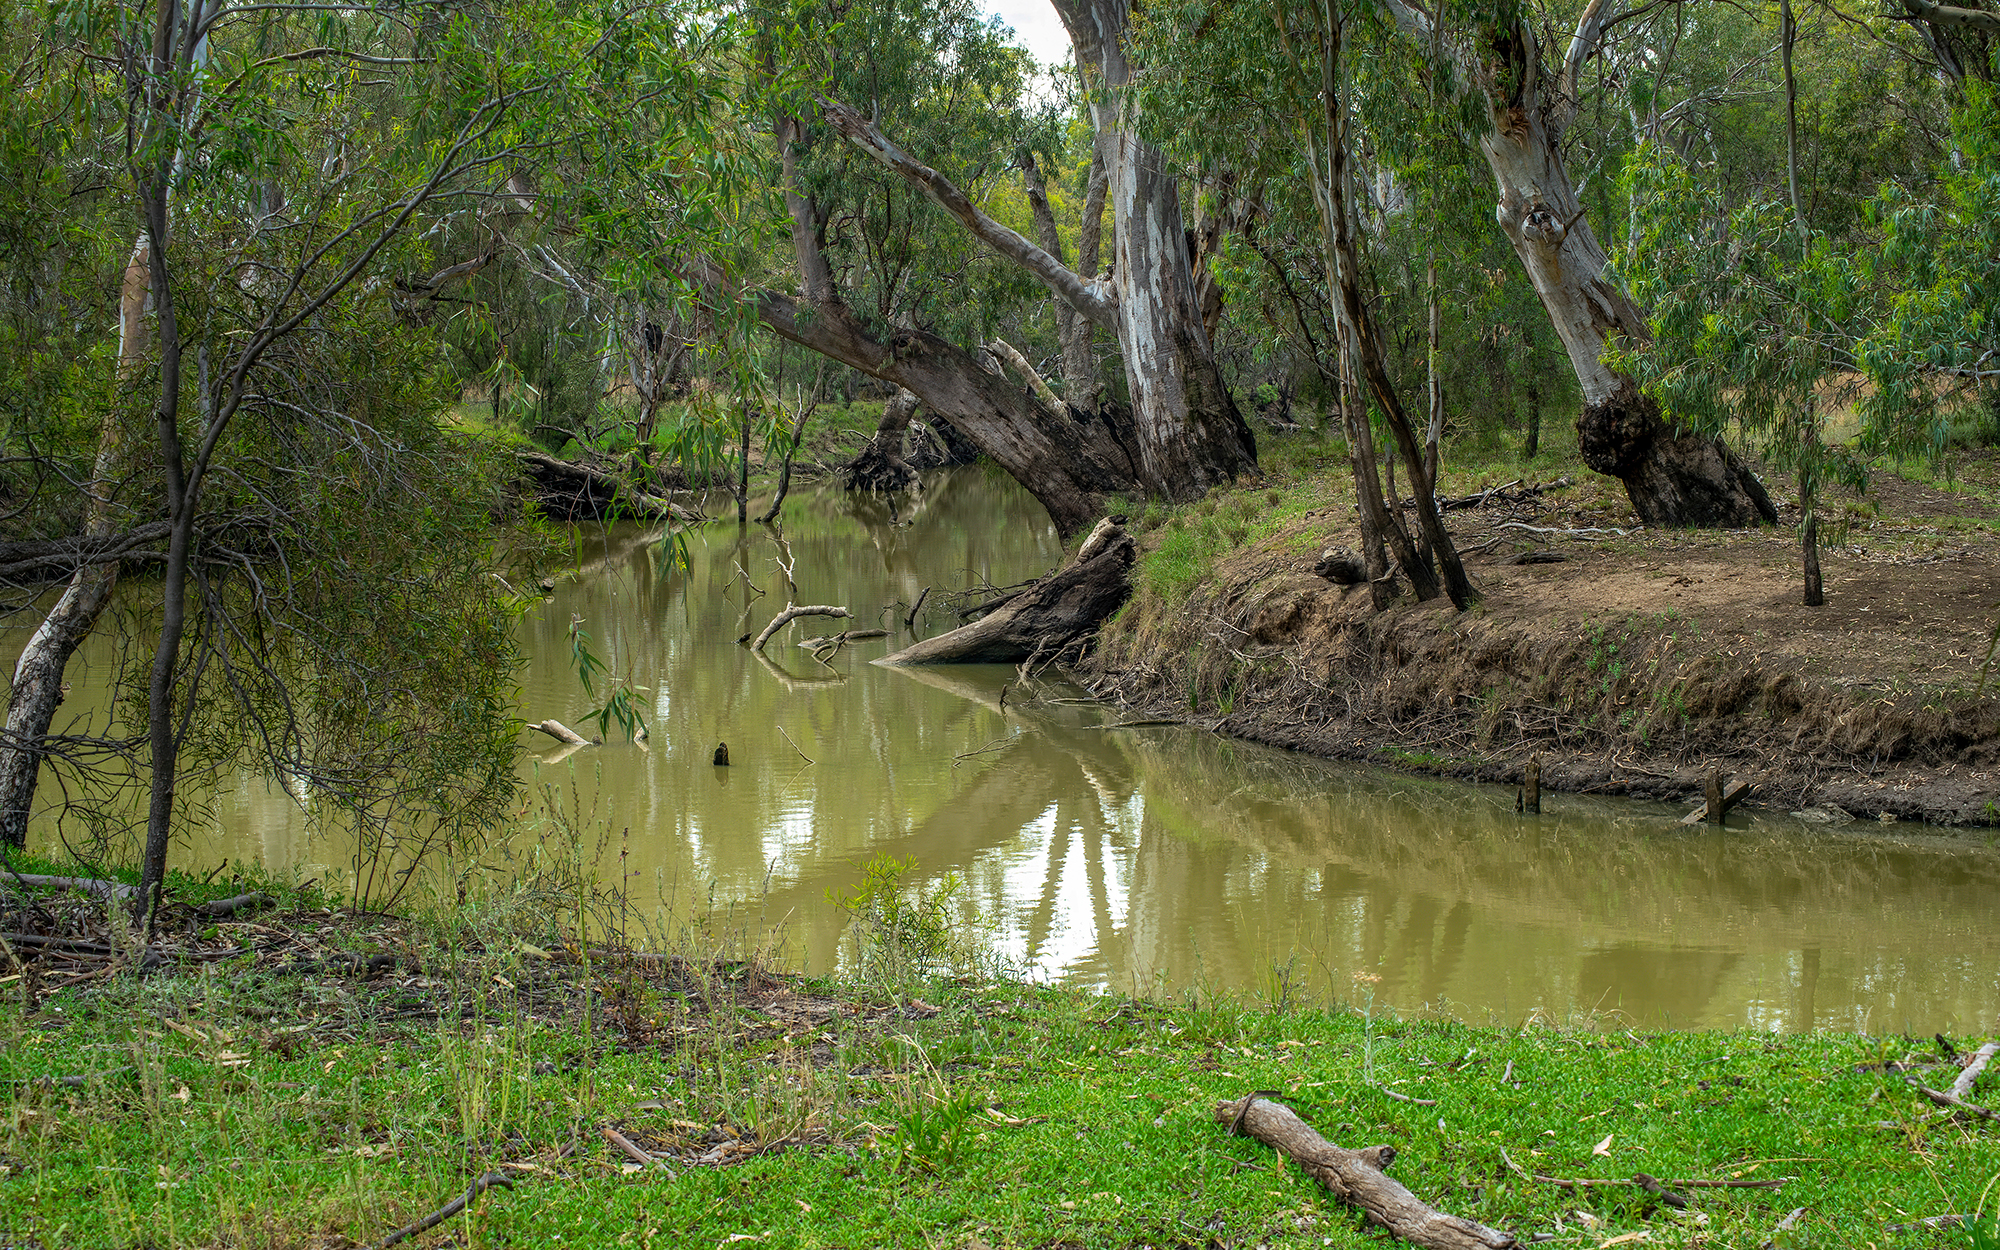 View along the river bank, Lachlan River, Hillston, NSW.